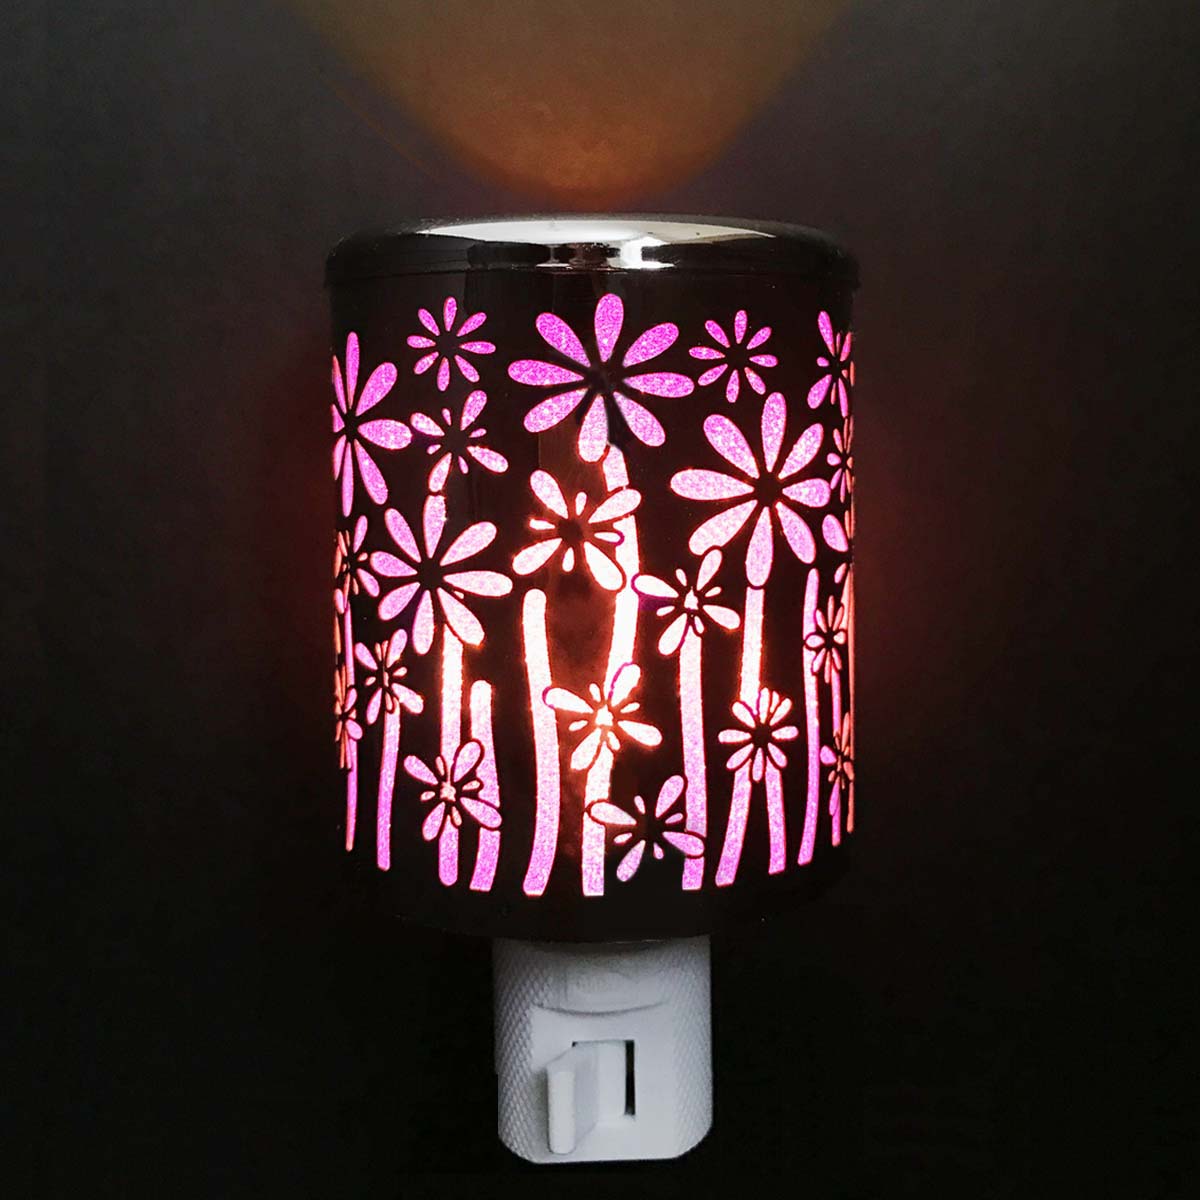 Nl 1105 Aluminum Crafted Led Night Light - Flower